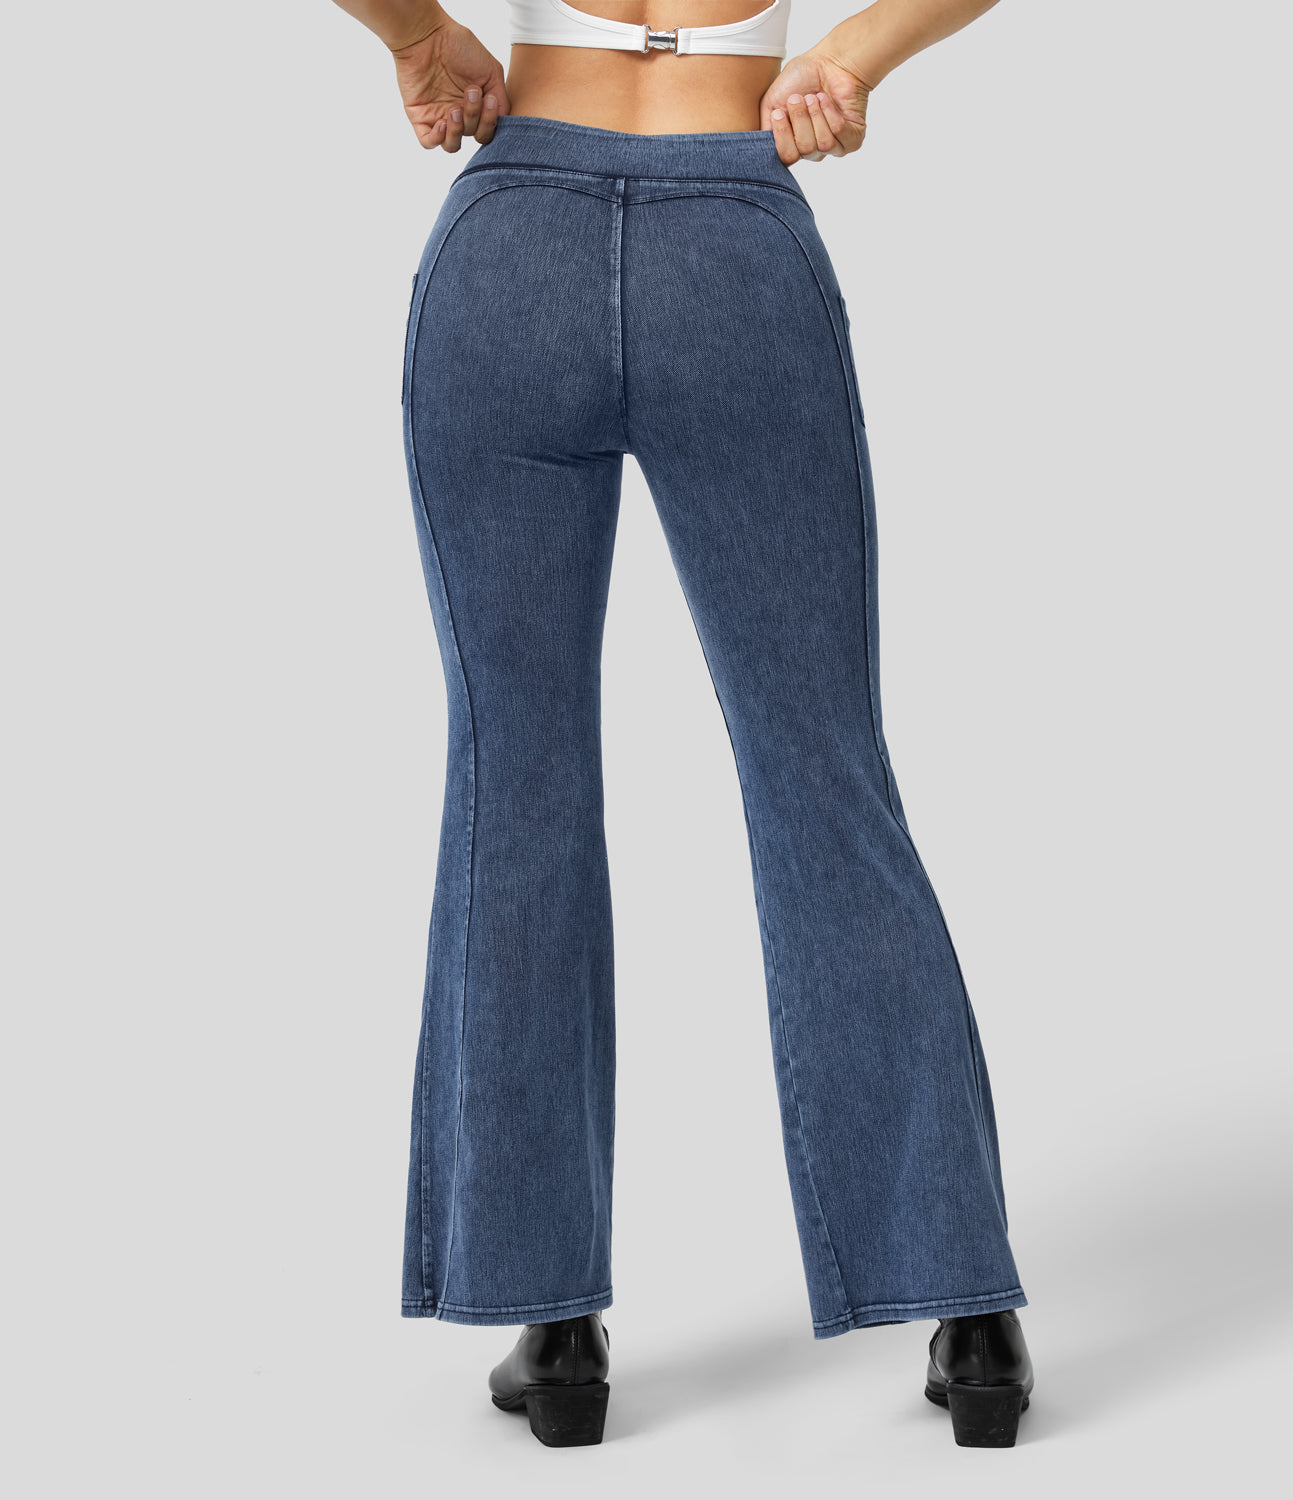 

Halara HalaraMagicв„ў High Waisted Side Pocket Stretchy Knit Casual Flare Jeans - Light Gray Washed Denim -  sweatpants jogger pants